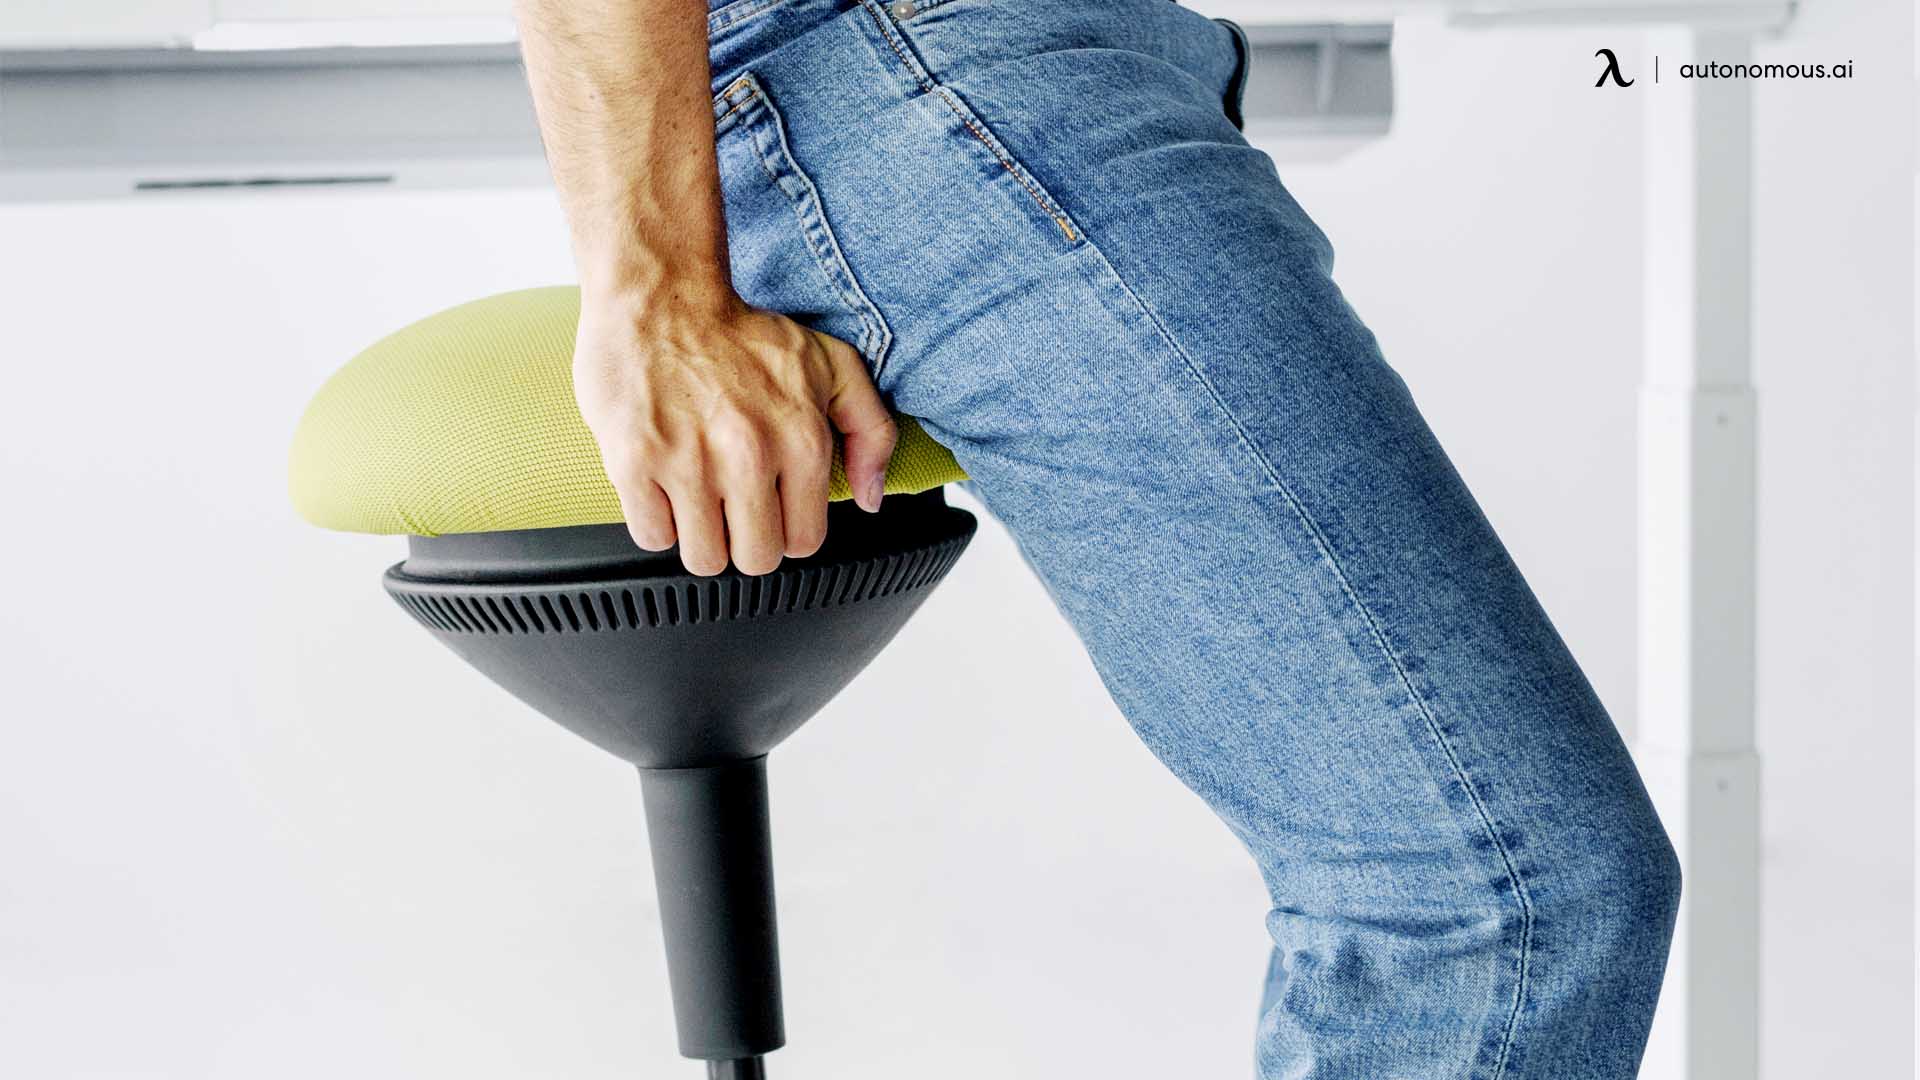 Ergonomic stool in home office workstation